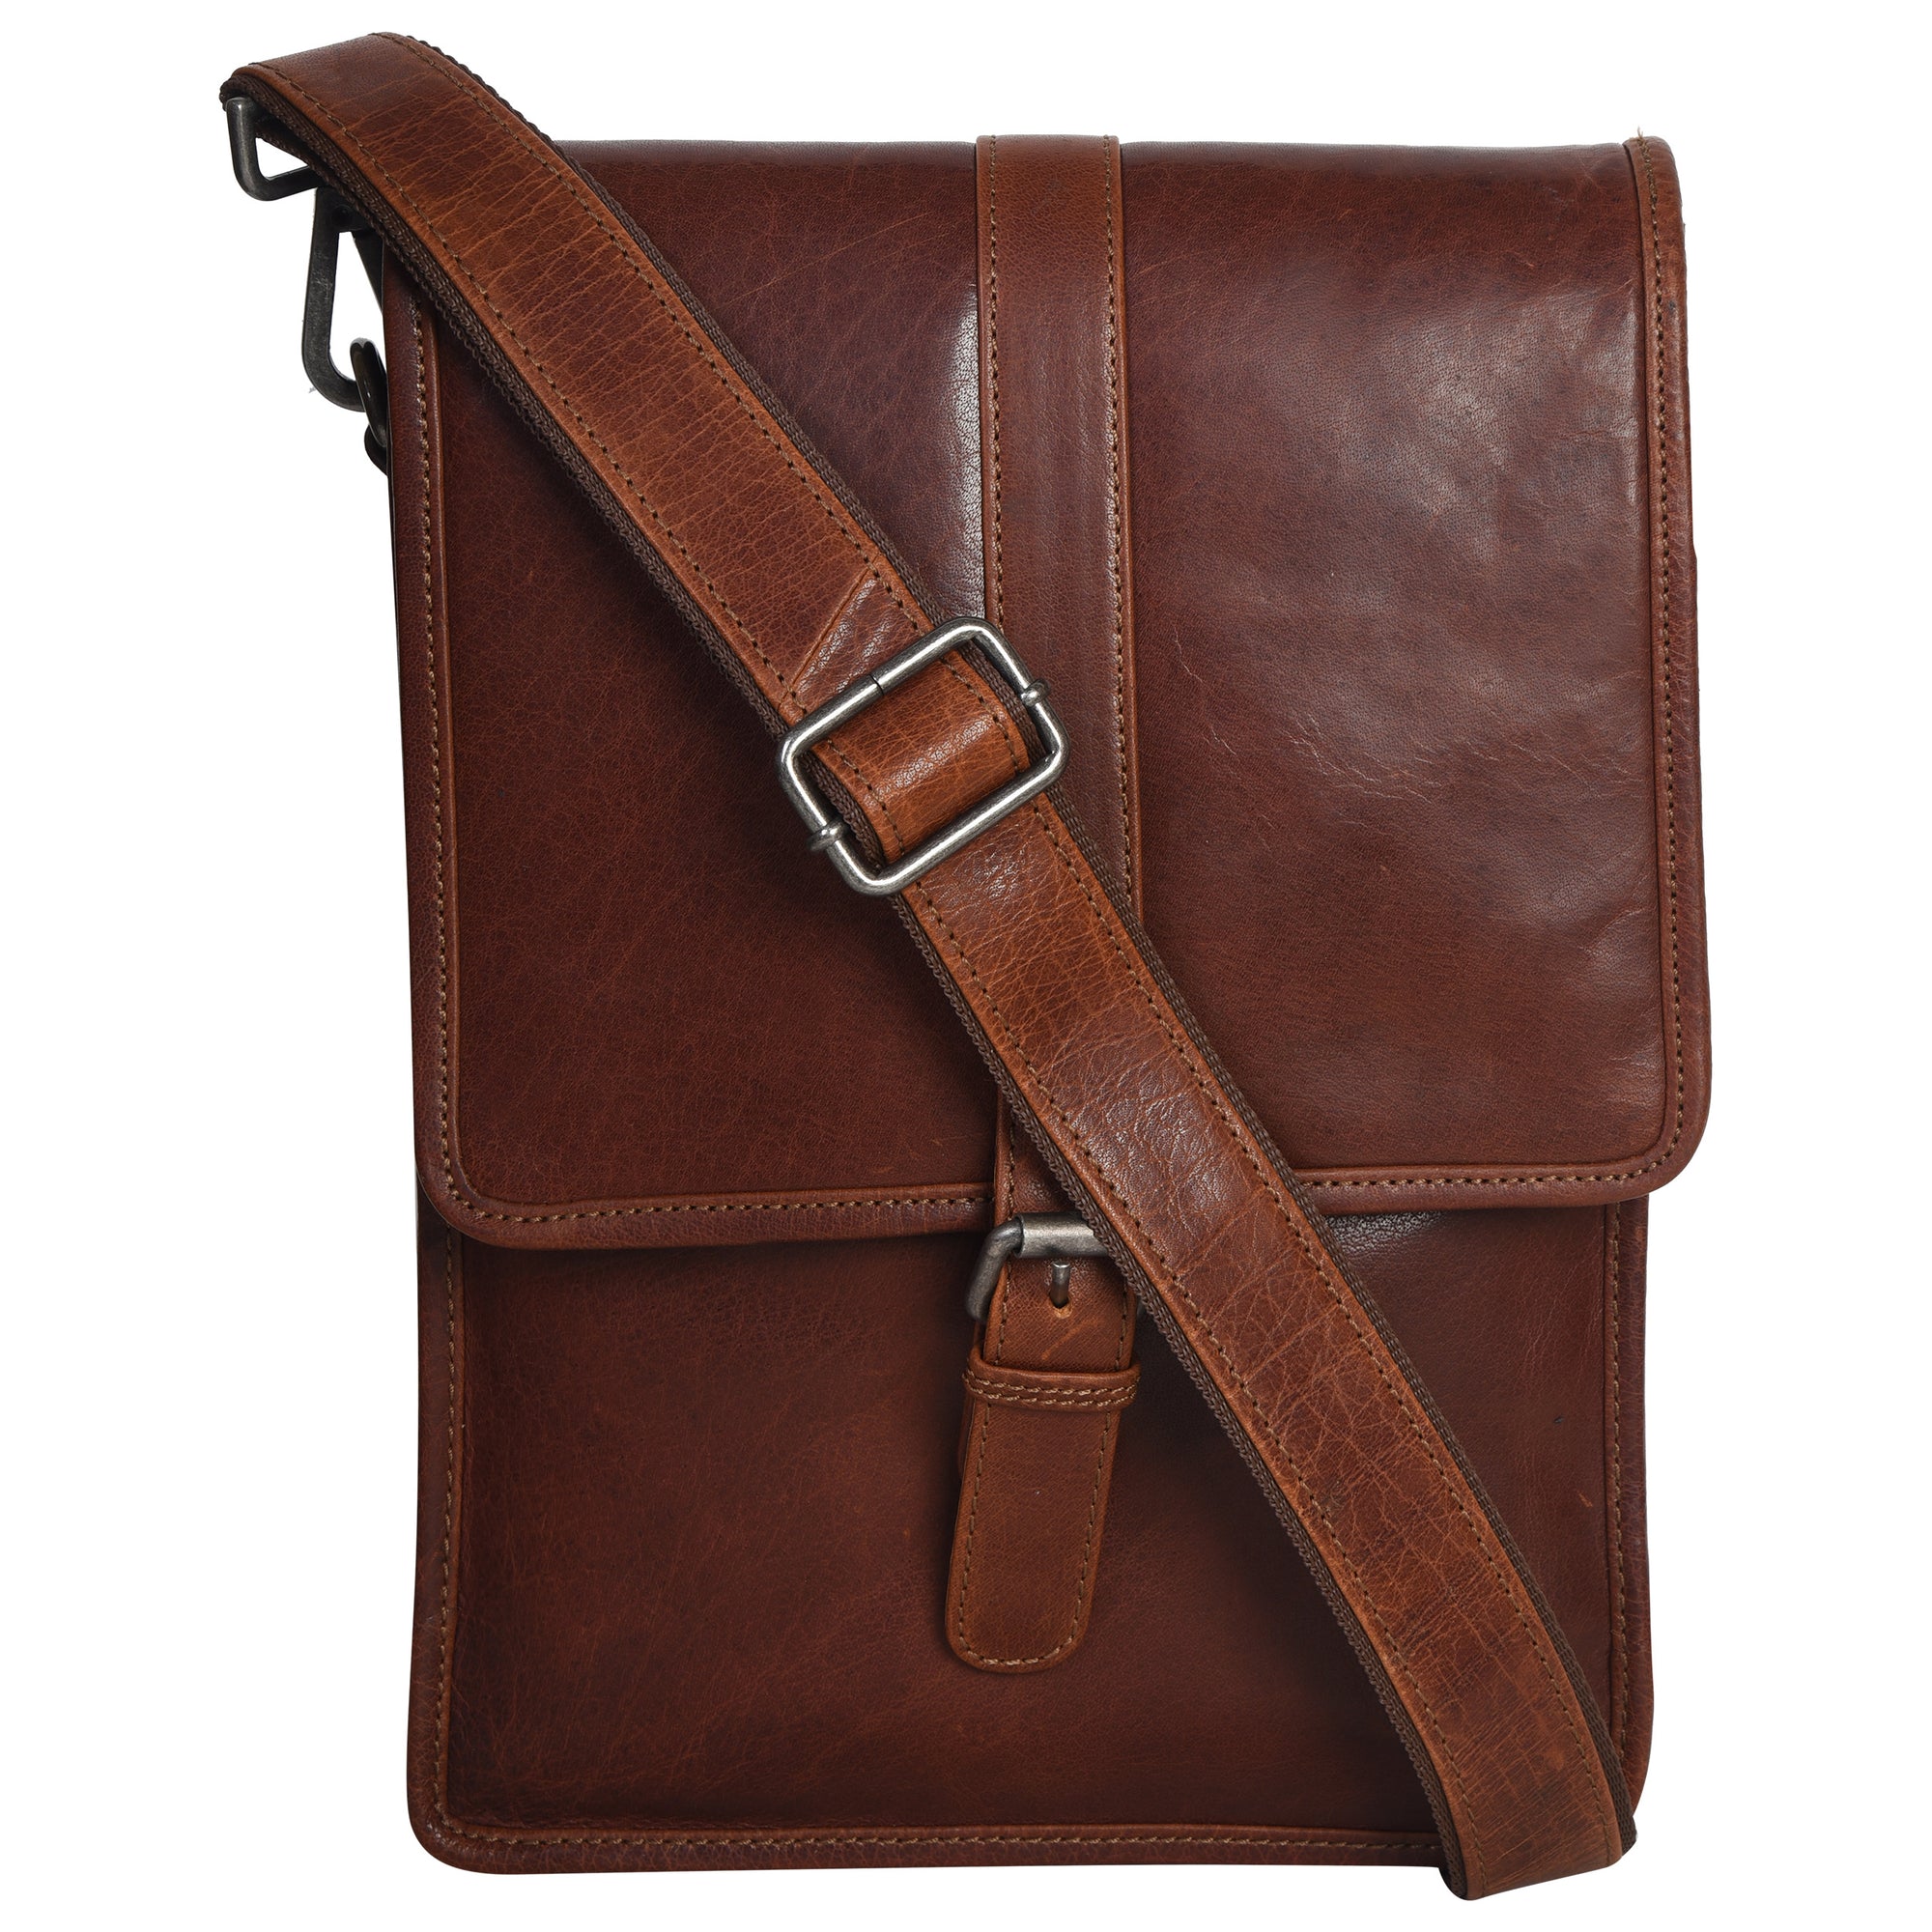 Tribal N/S Messenger Bag Vintage Brown - 5580